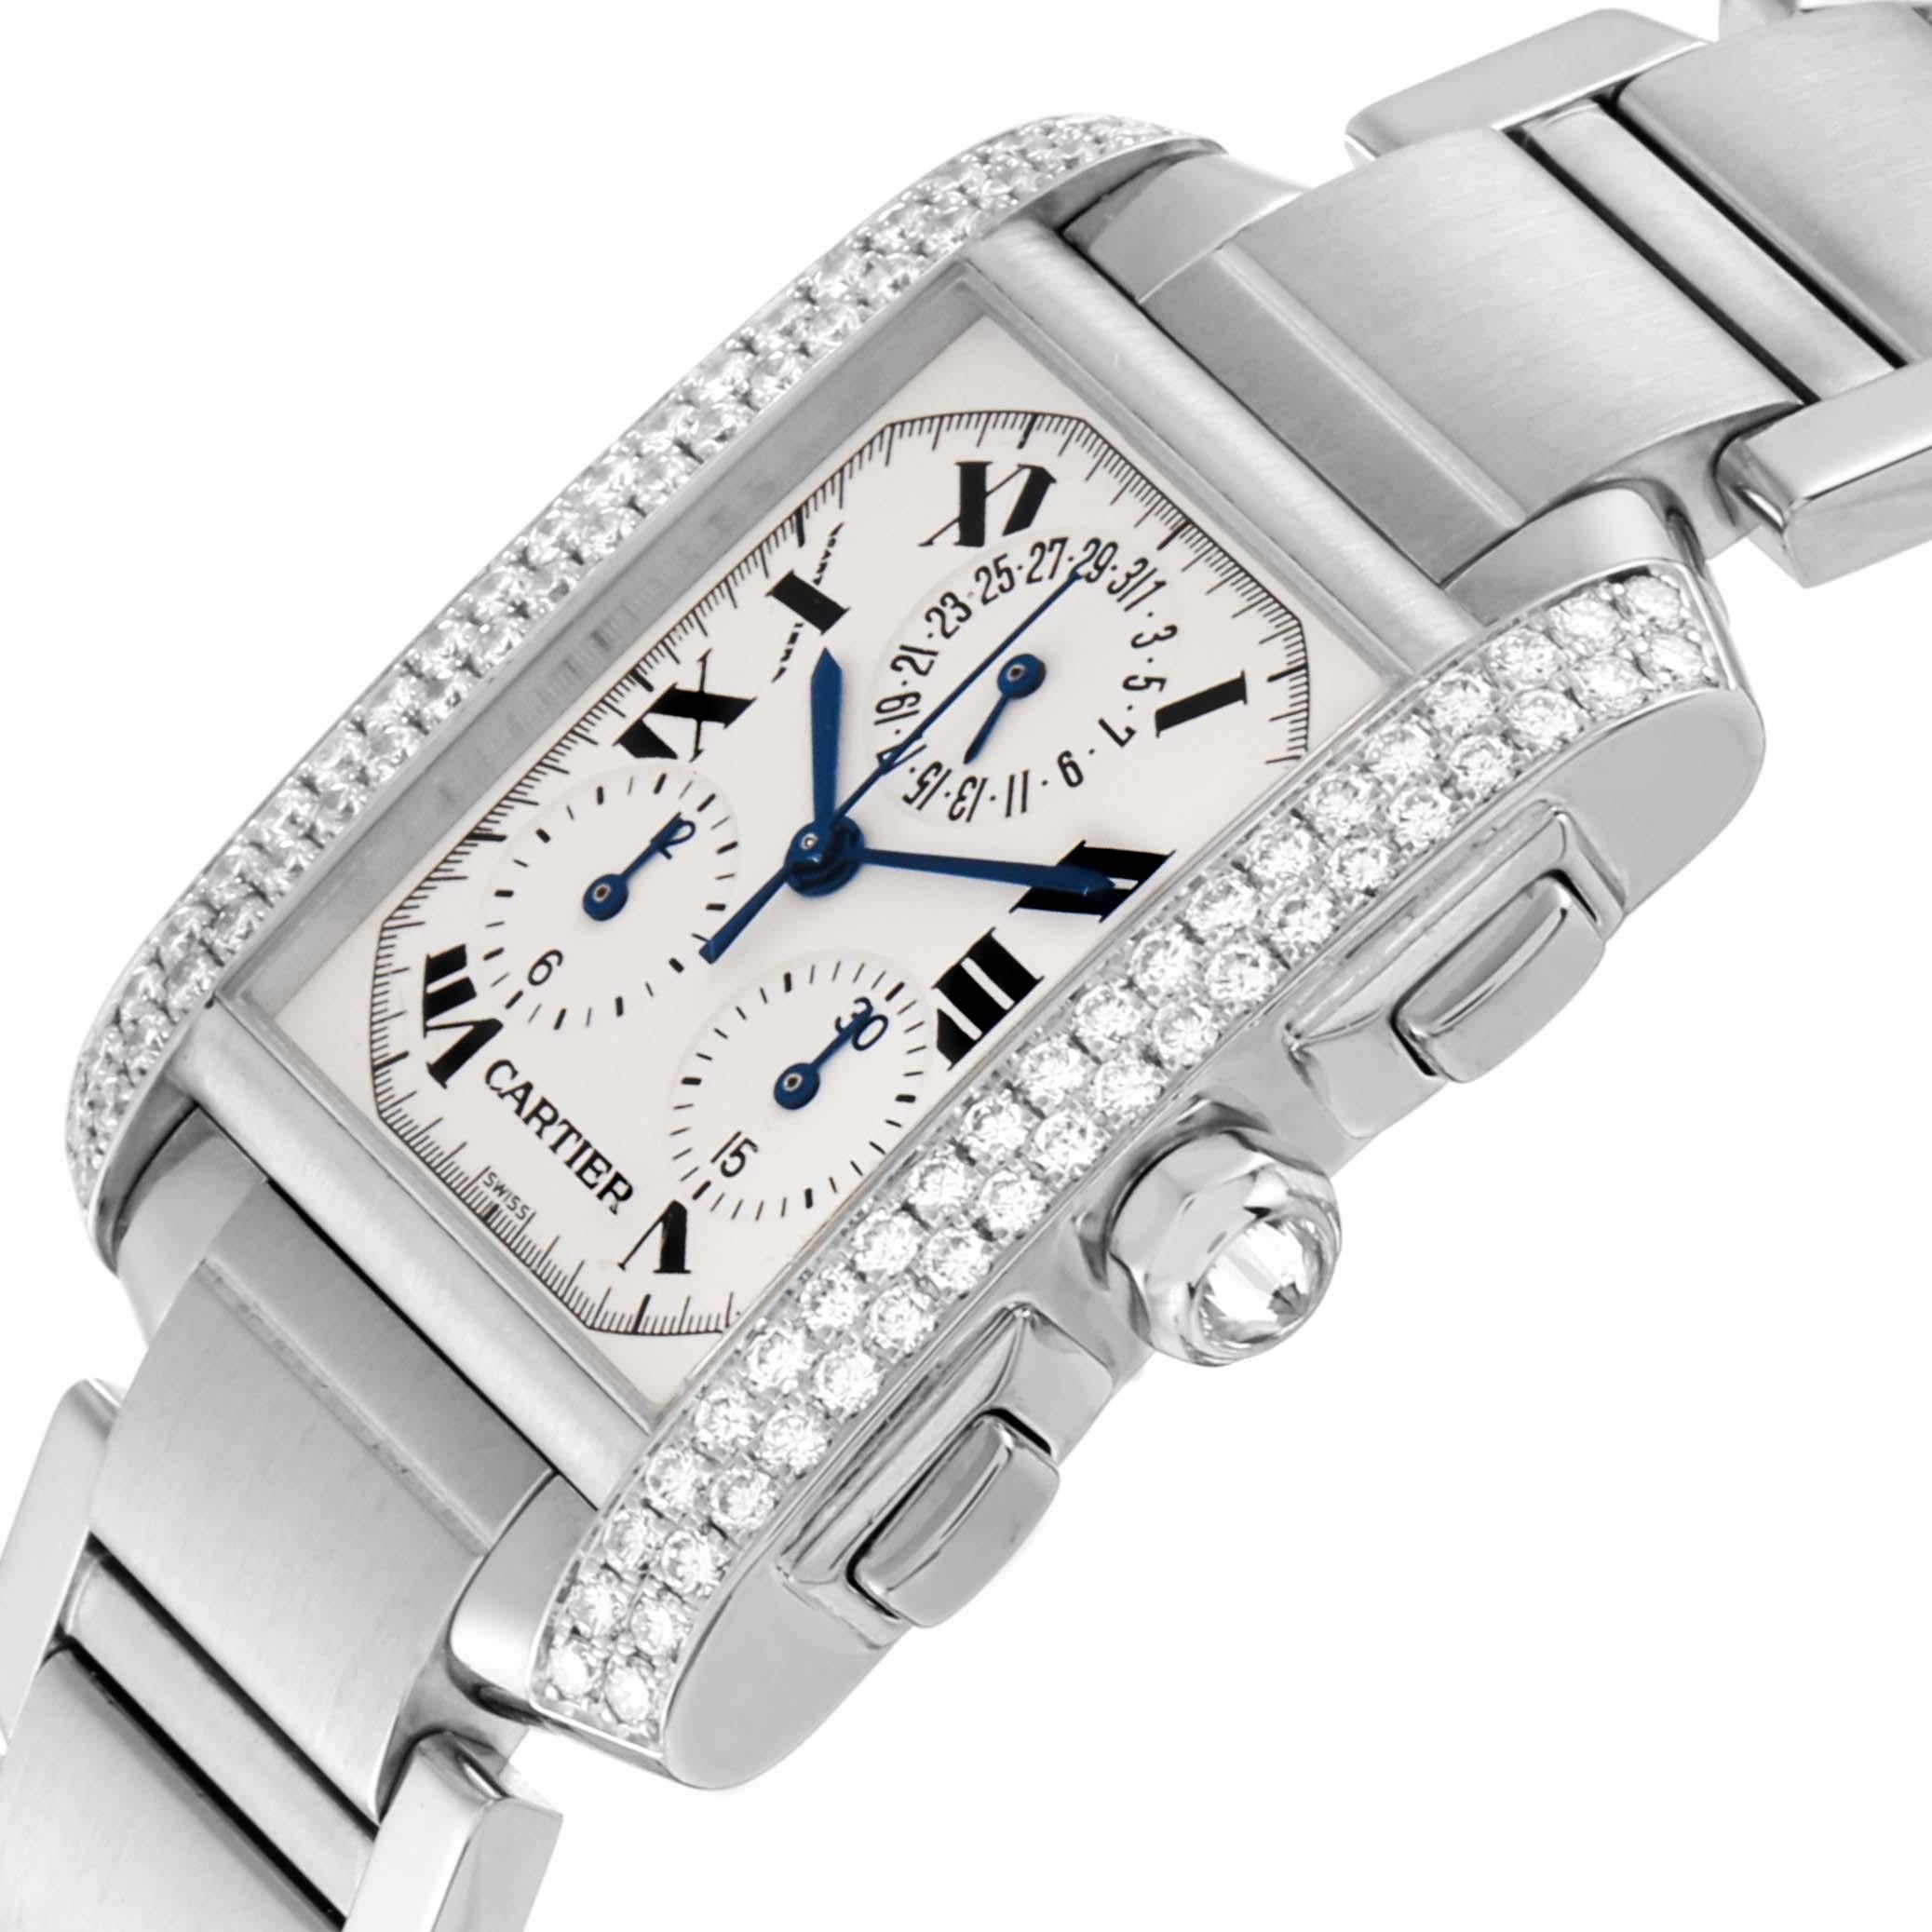 Cartier Tank Francaise Chrongraph White Gold Diamond Men's Watch 2367 In Excellent Condition For Sale In Atlanta, GA